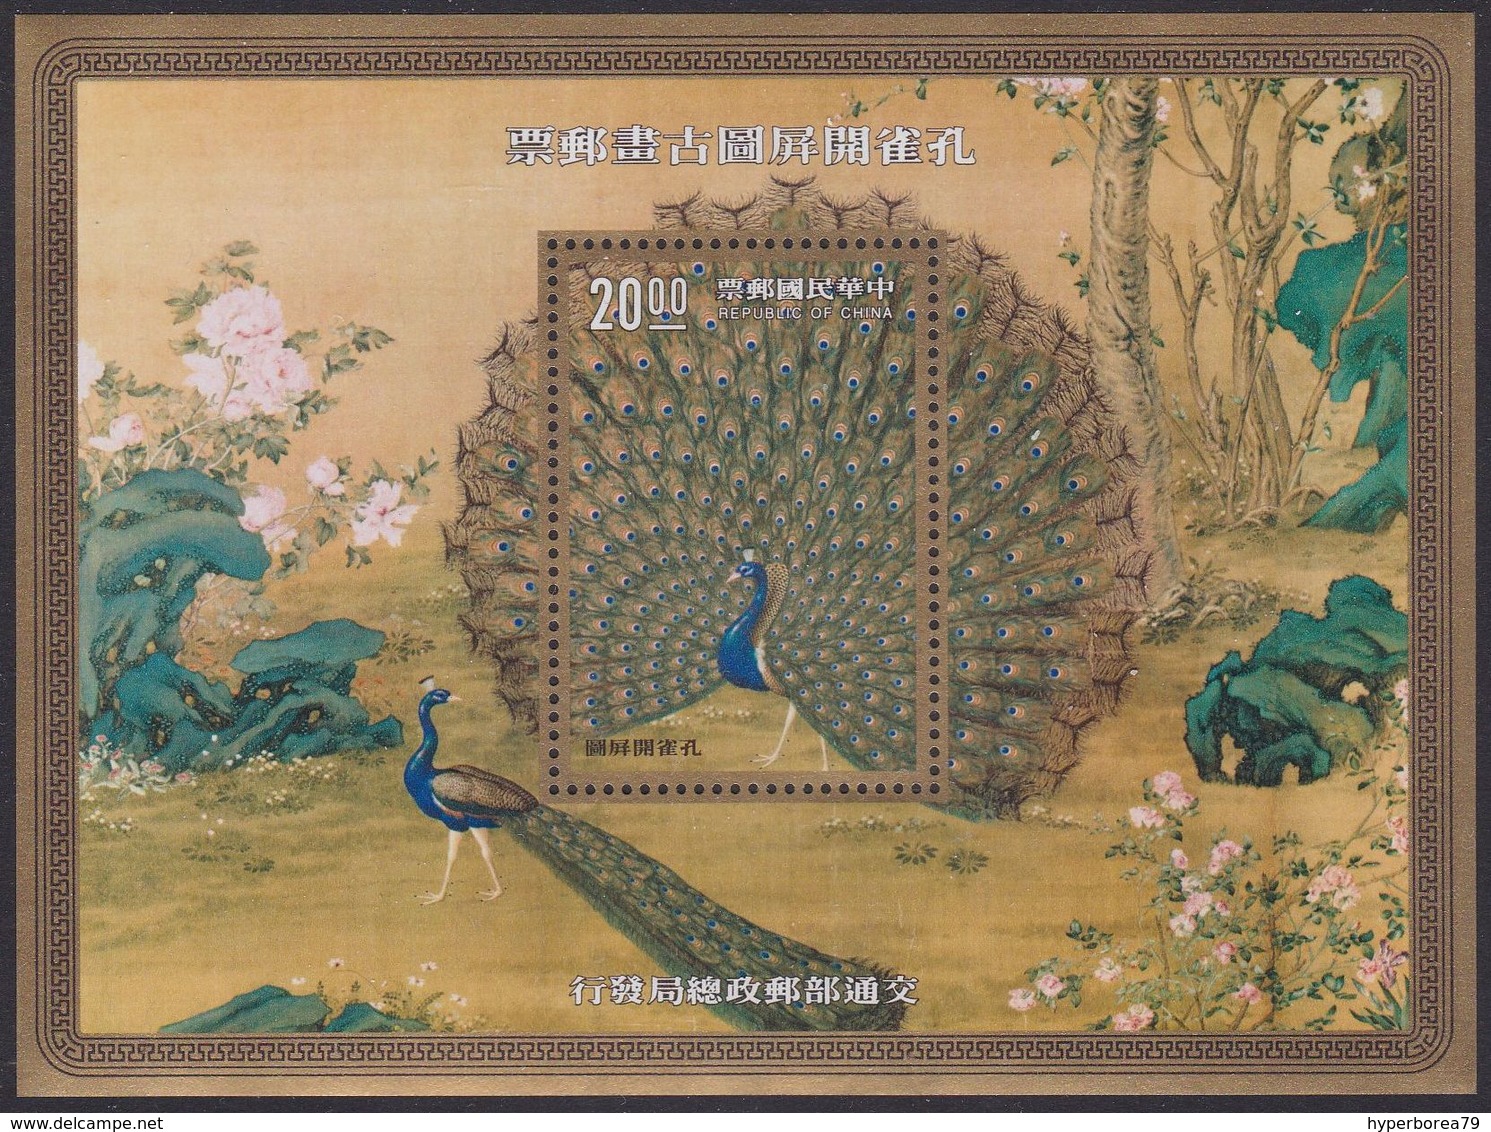 Taiwan 2005 - " Peacocks " By Giuseppe Castiglione 1991 M/S - MNH - Pauwen